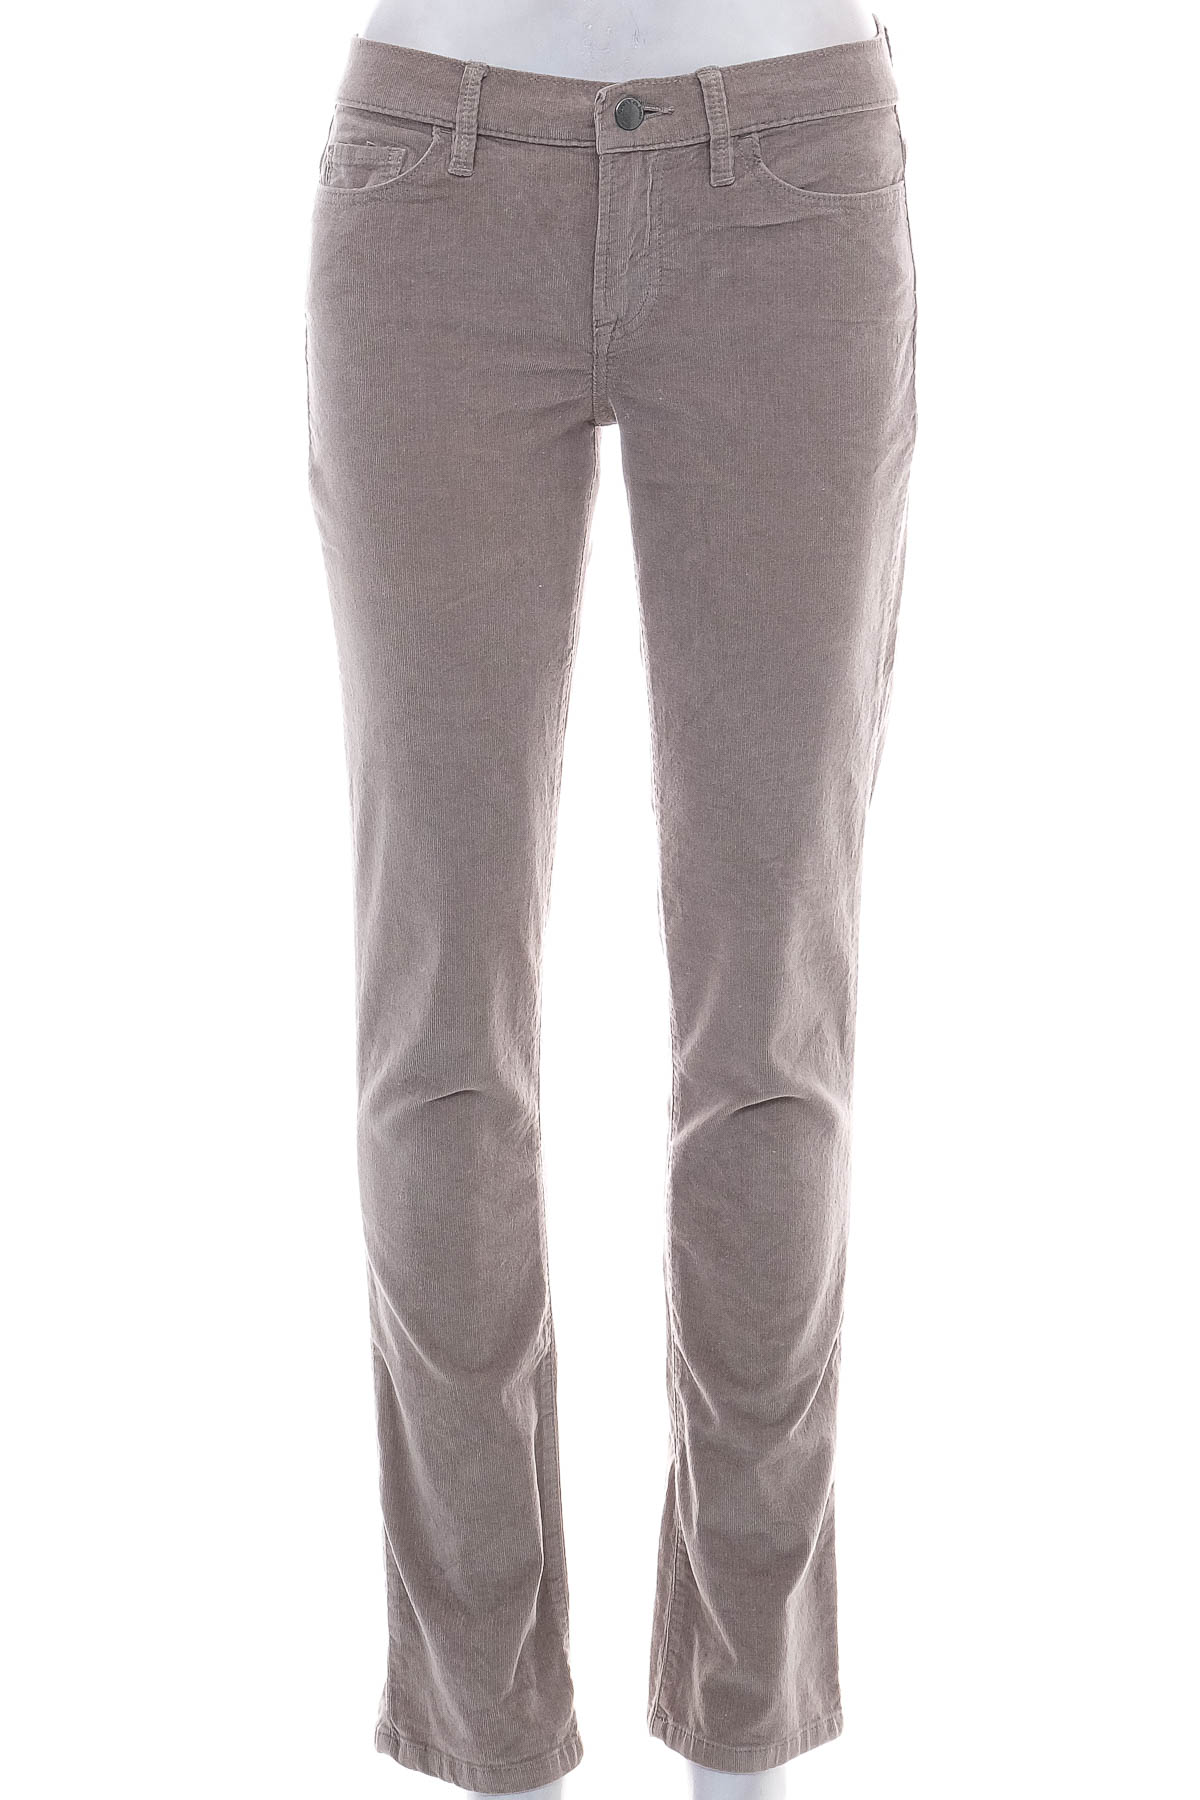 Women's trousers - Calvin Klein Jeans - 0